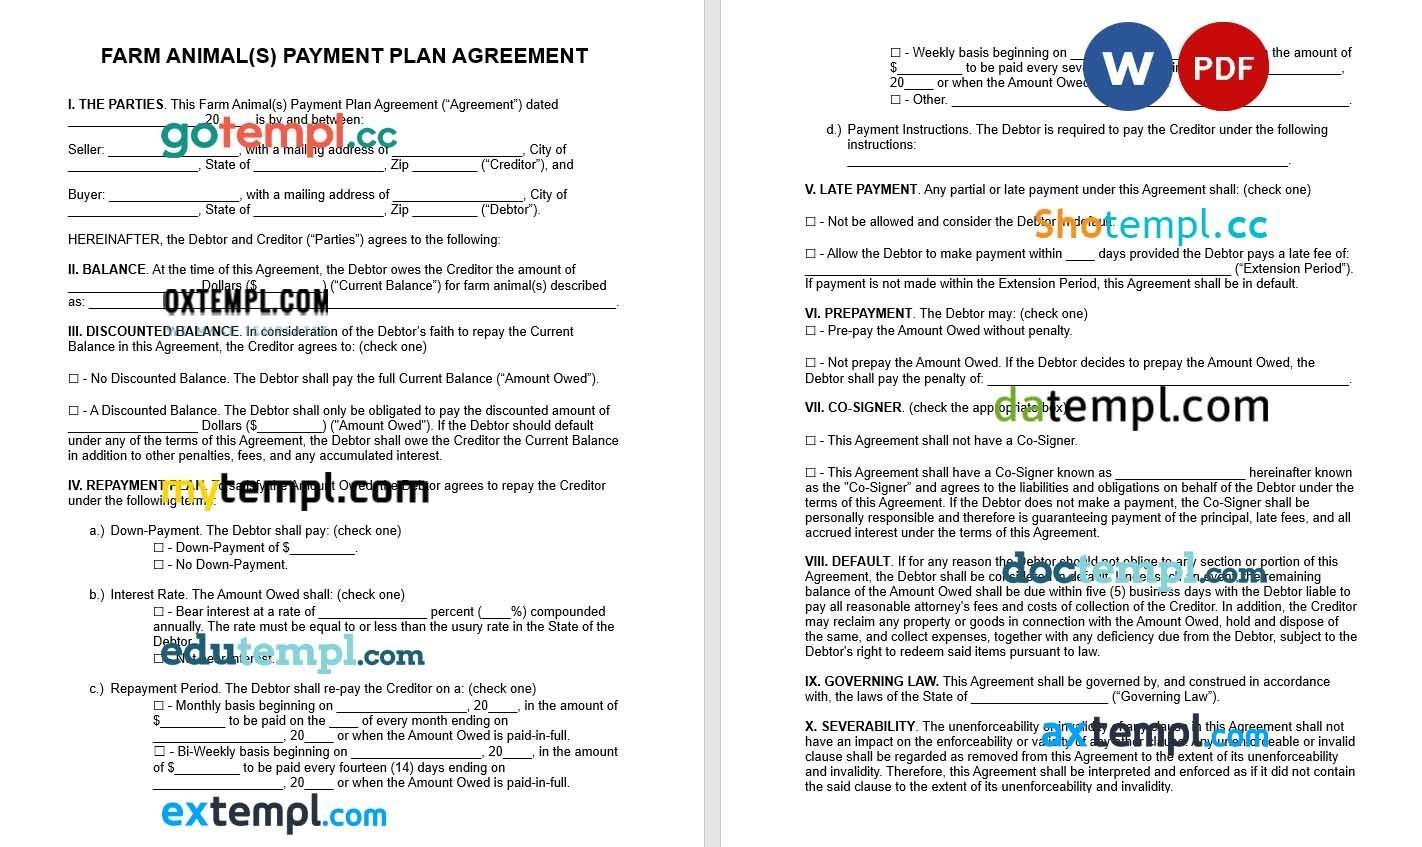 Farm Animal Payment Plan Agreement Word example, fully editable